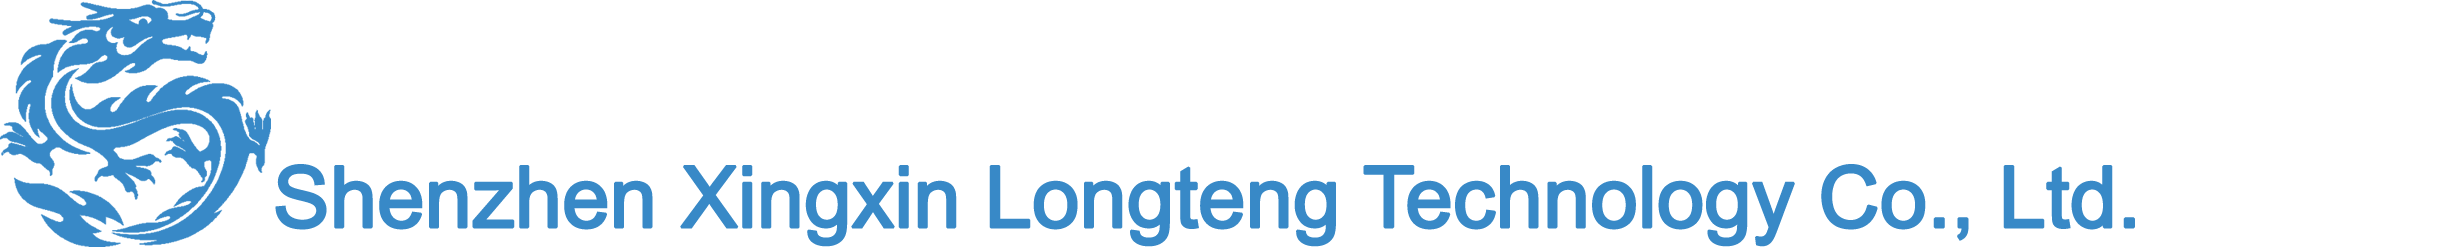 Shenzhen Xingxin Longteng Technology Co., Ltd.